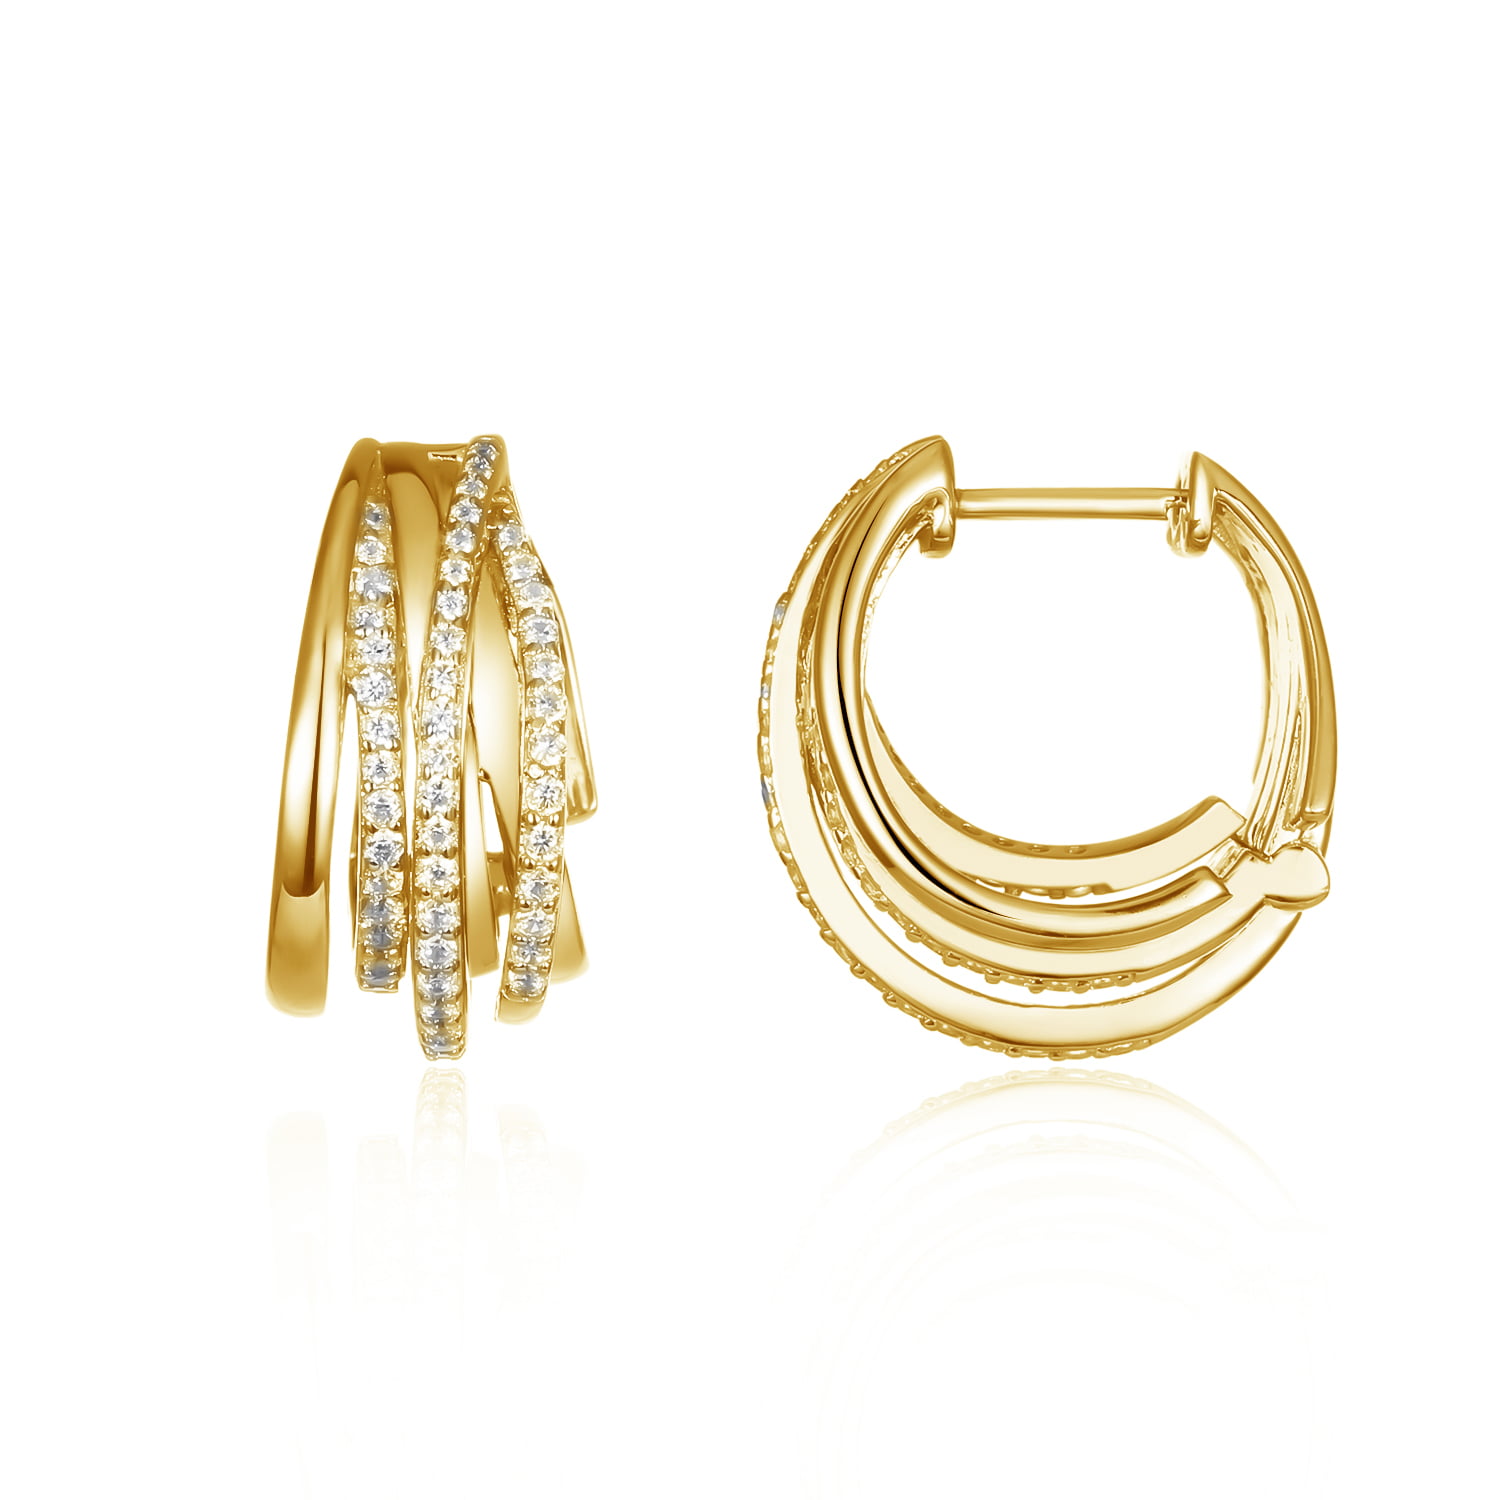 Staggered earrings-Gold - sunrise-jewel